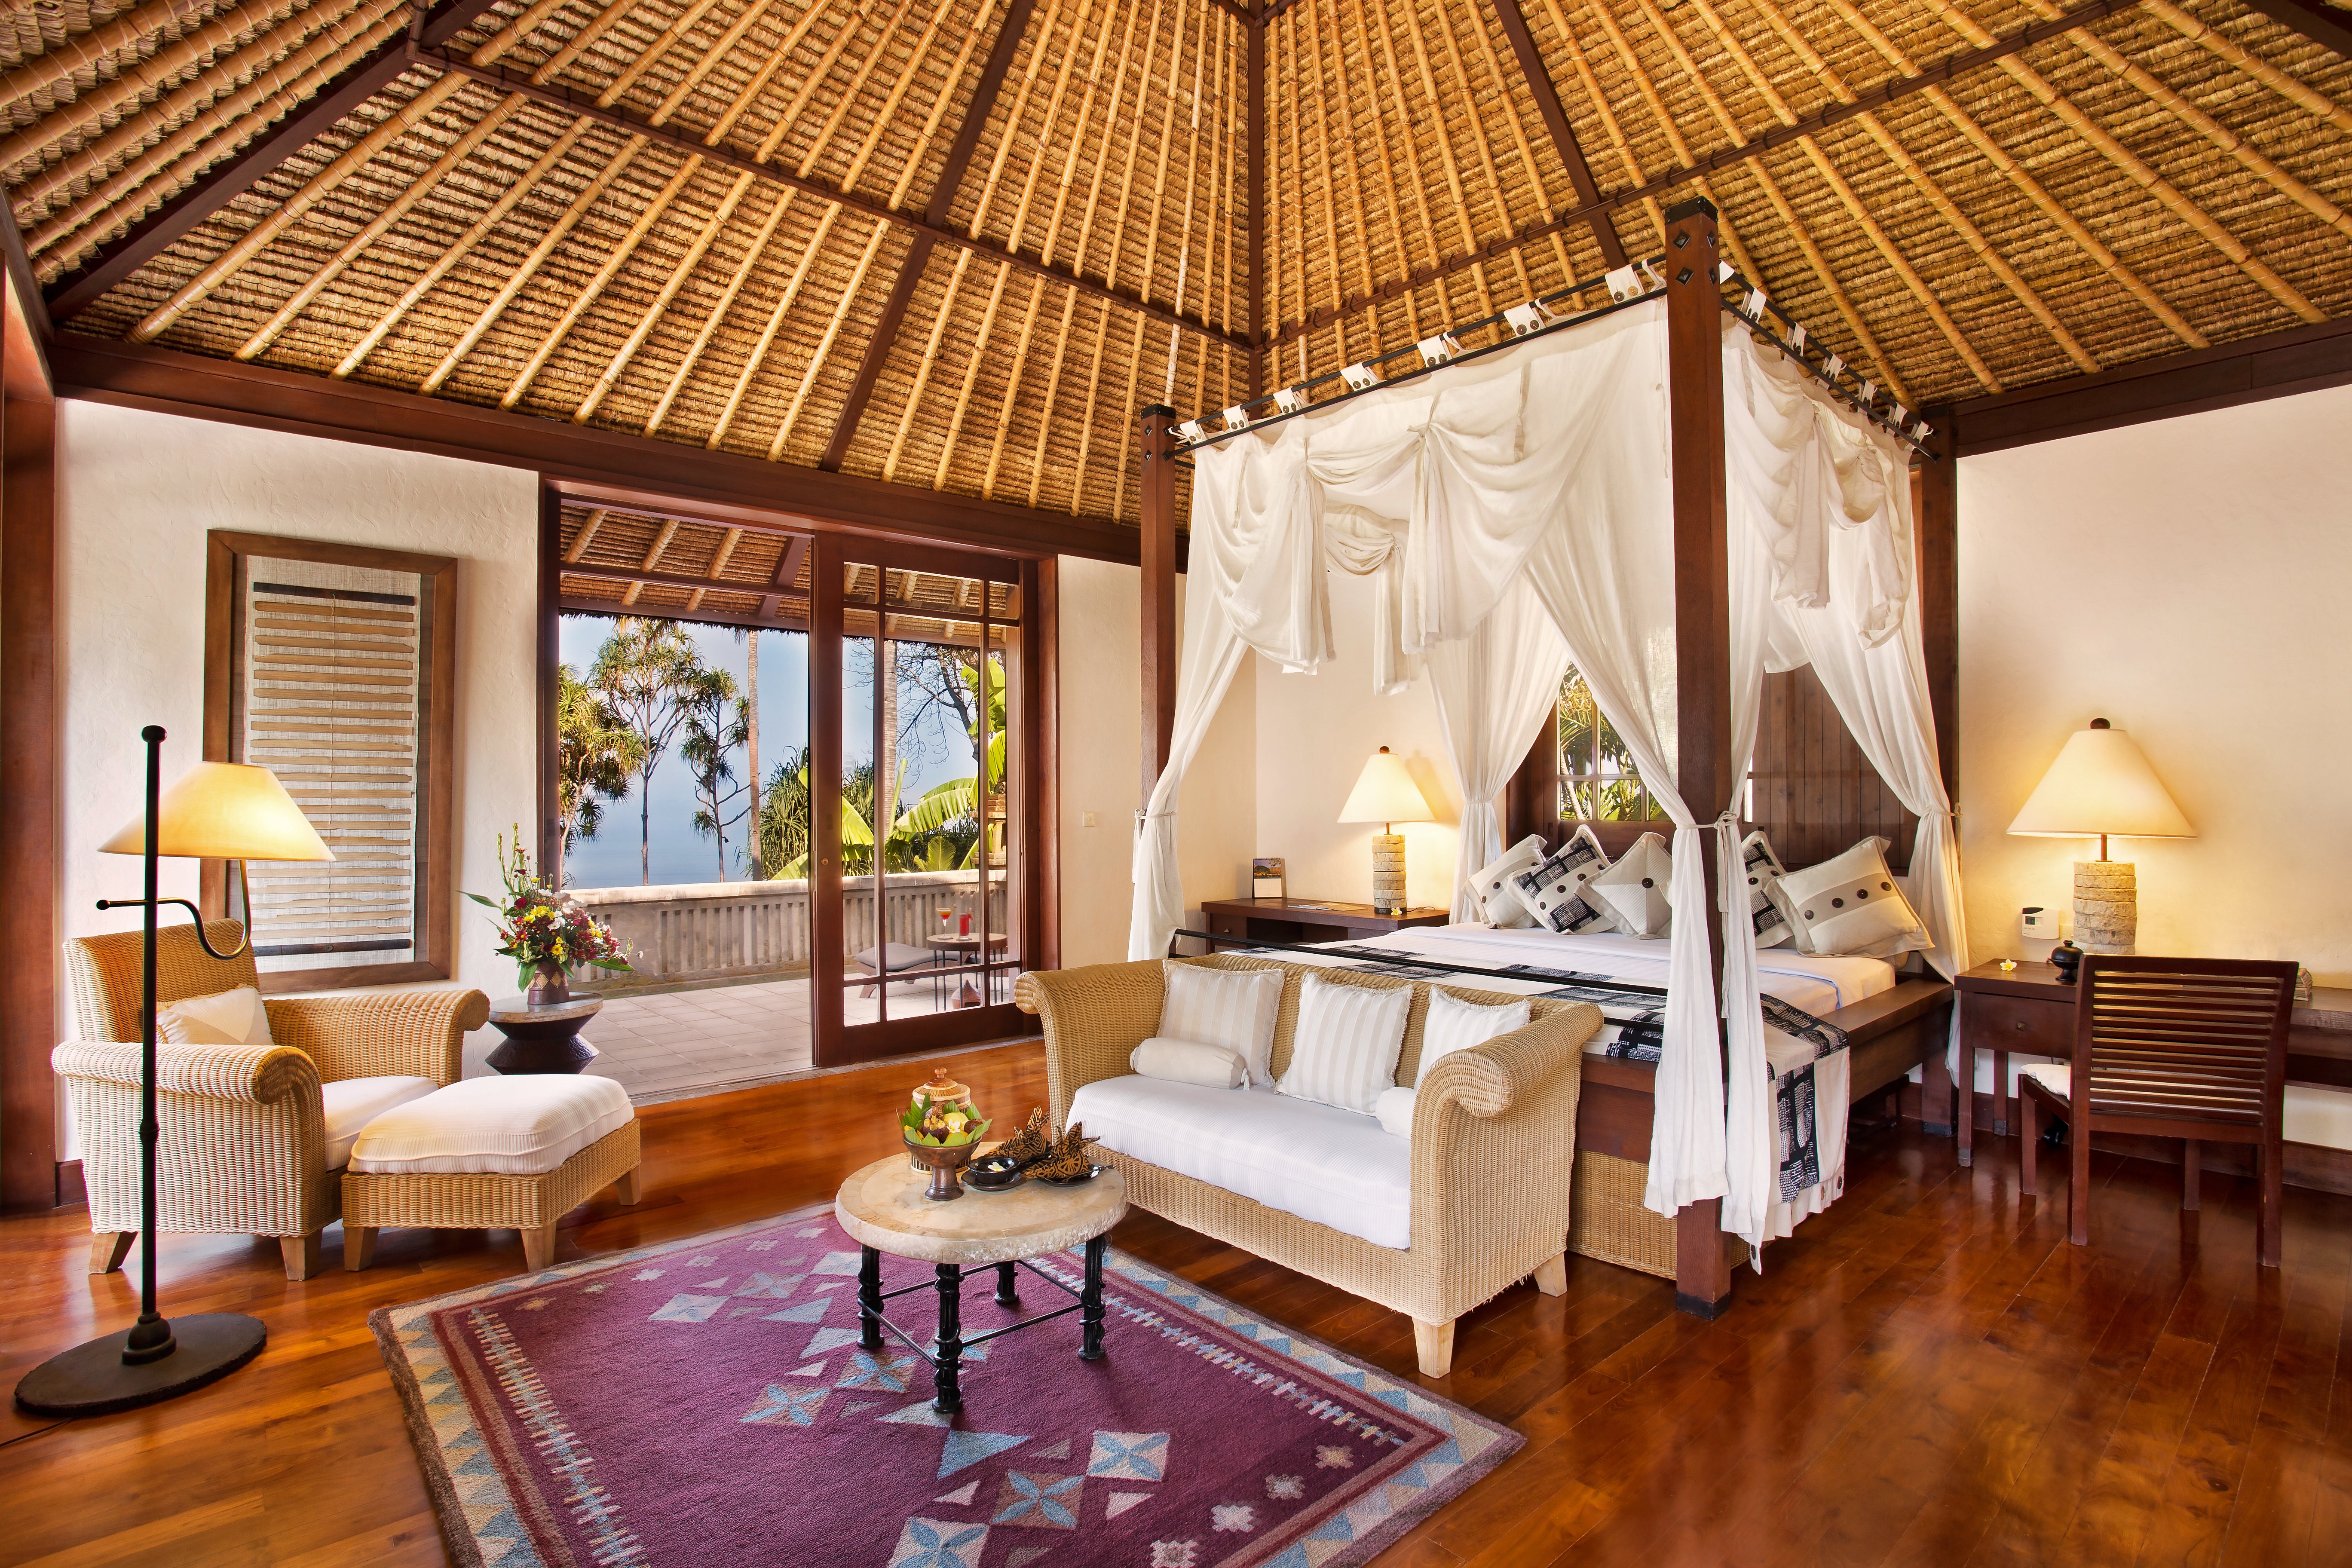 Villas at the Oberoi in Lombok feel palatial